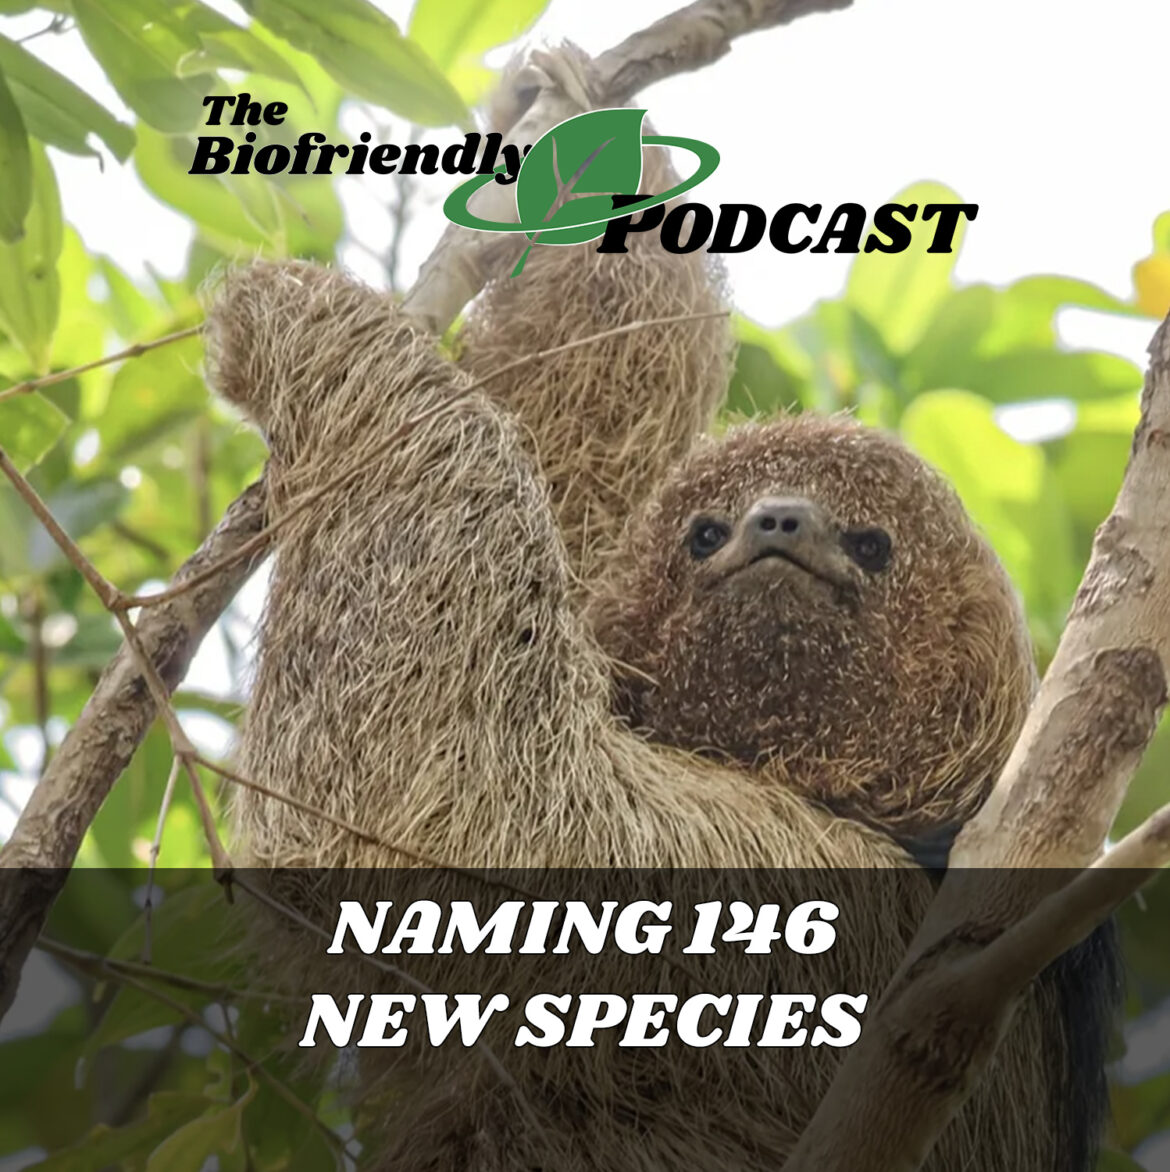 Naming 146 New Species